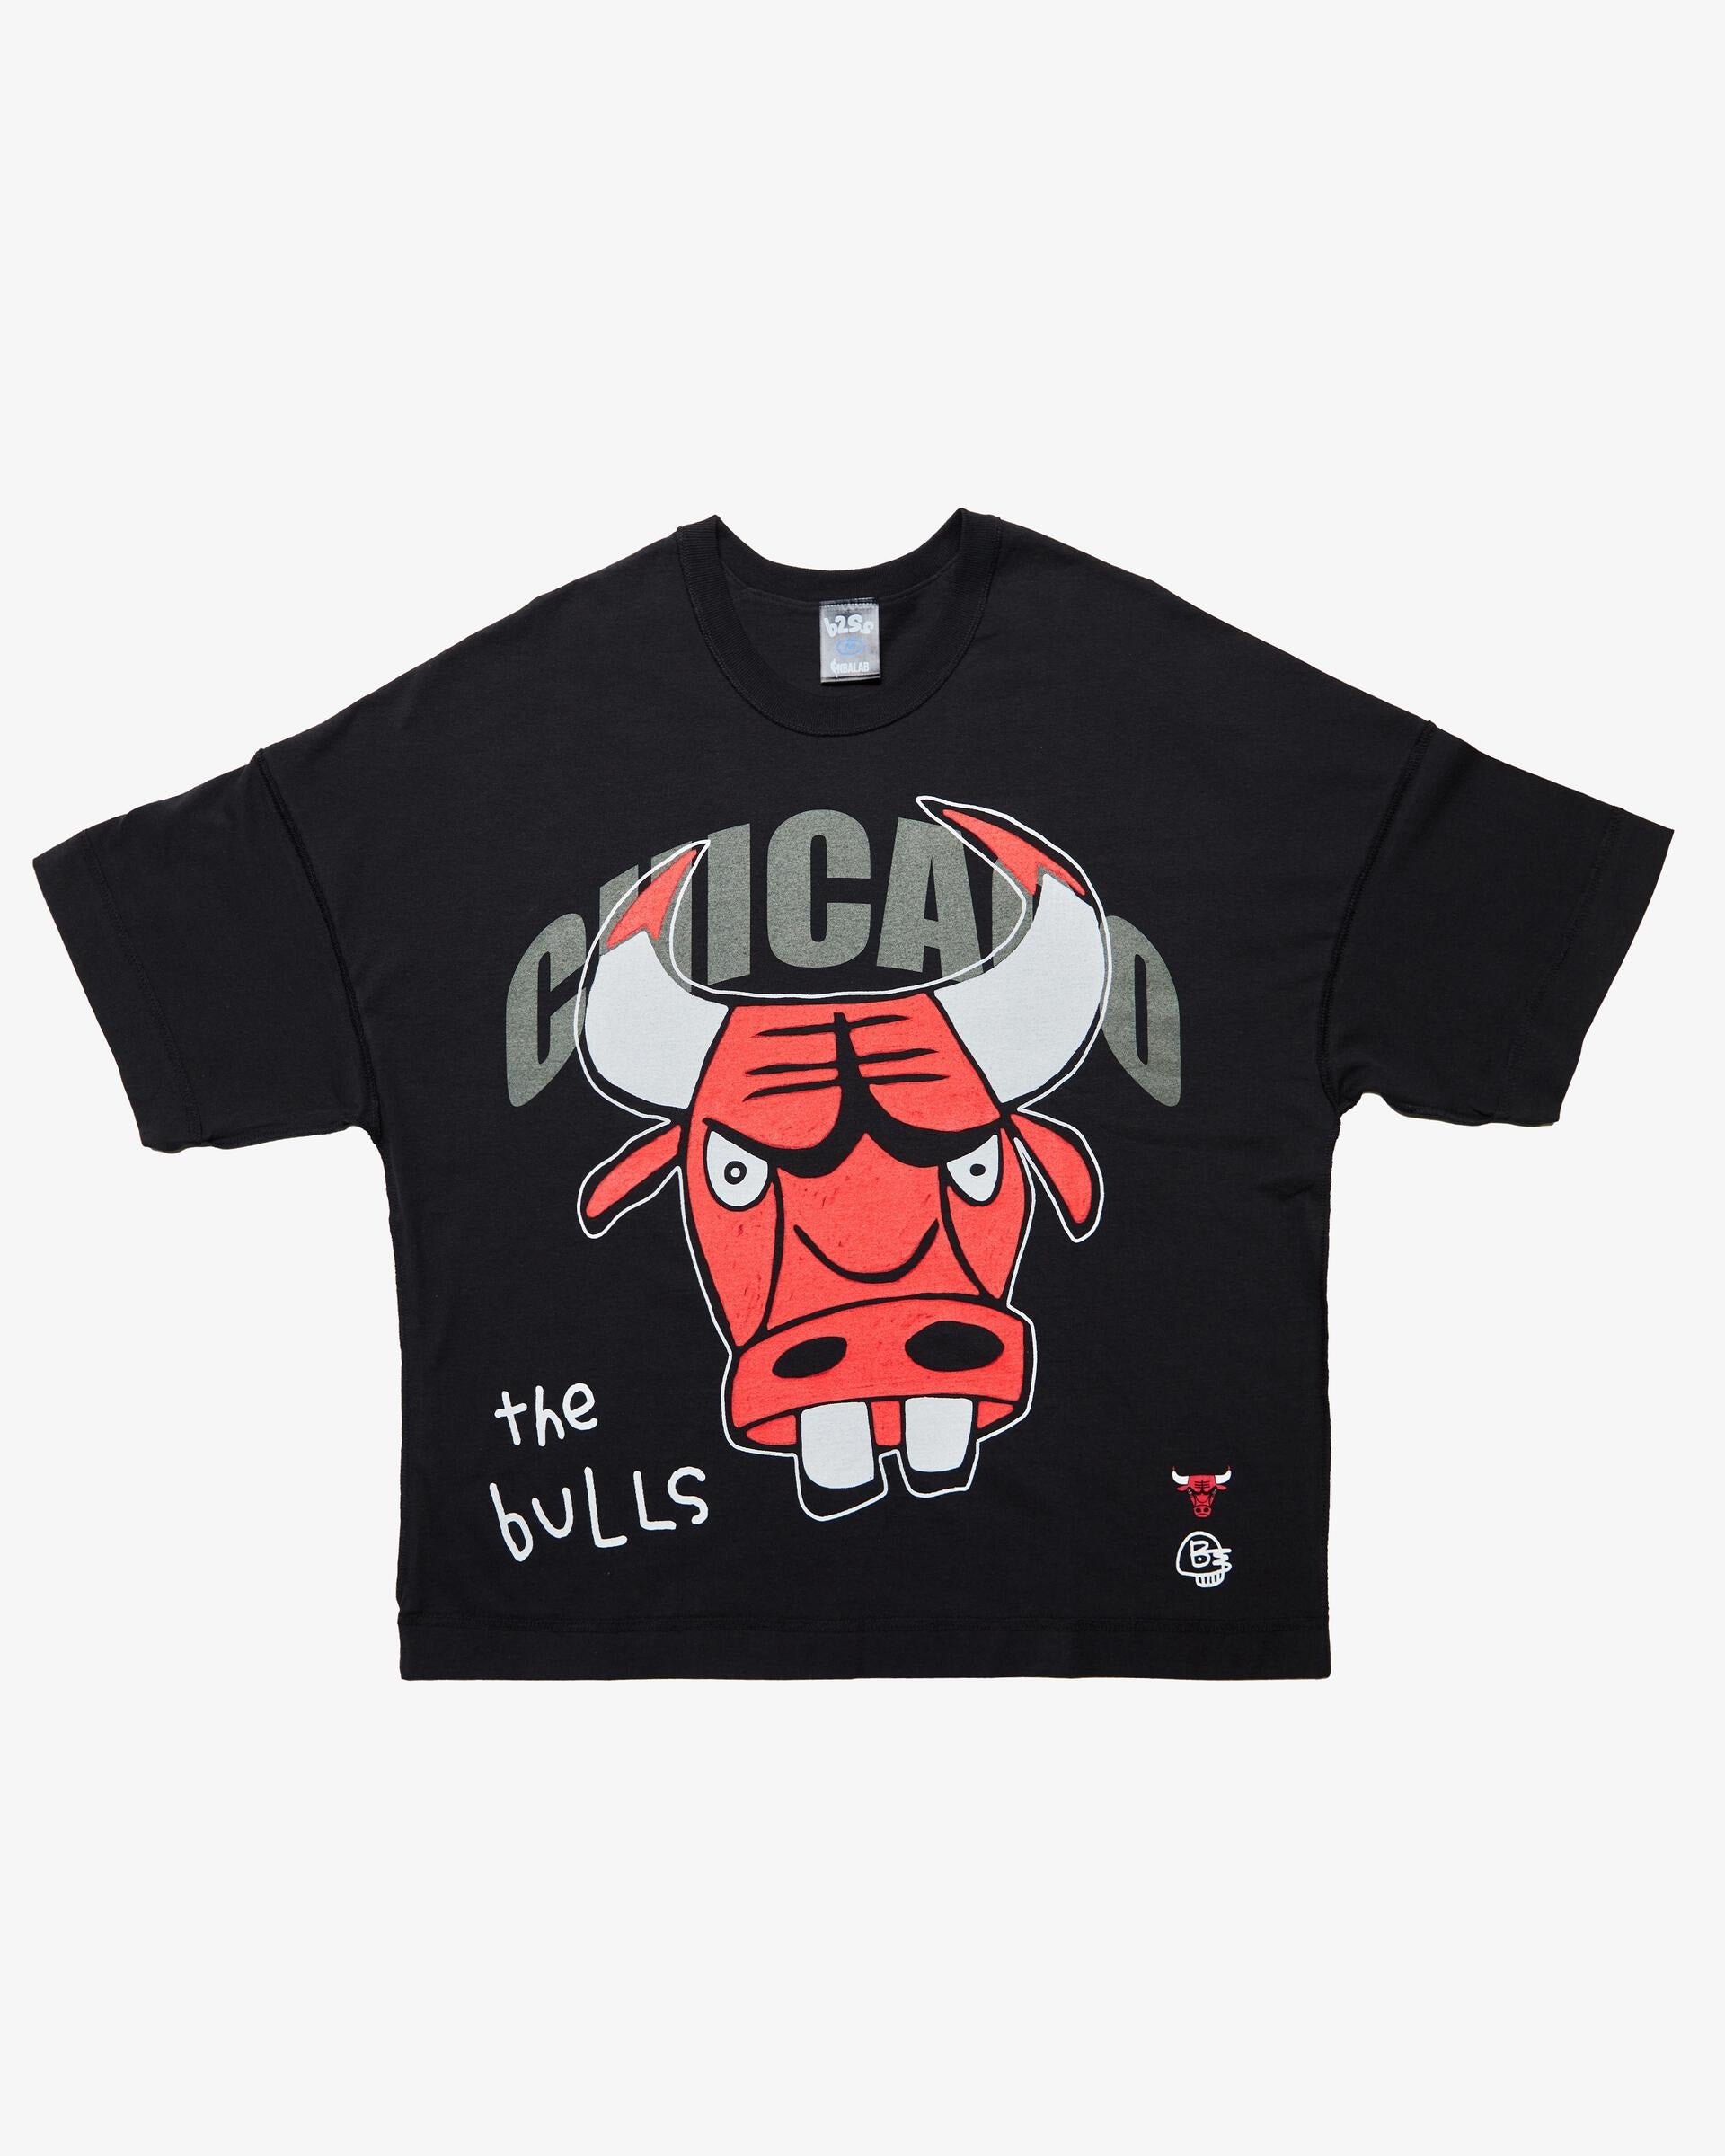 B2SS Tee Shirt - Chicago Bulls